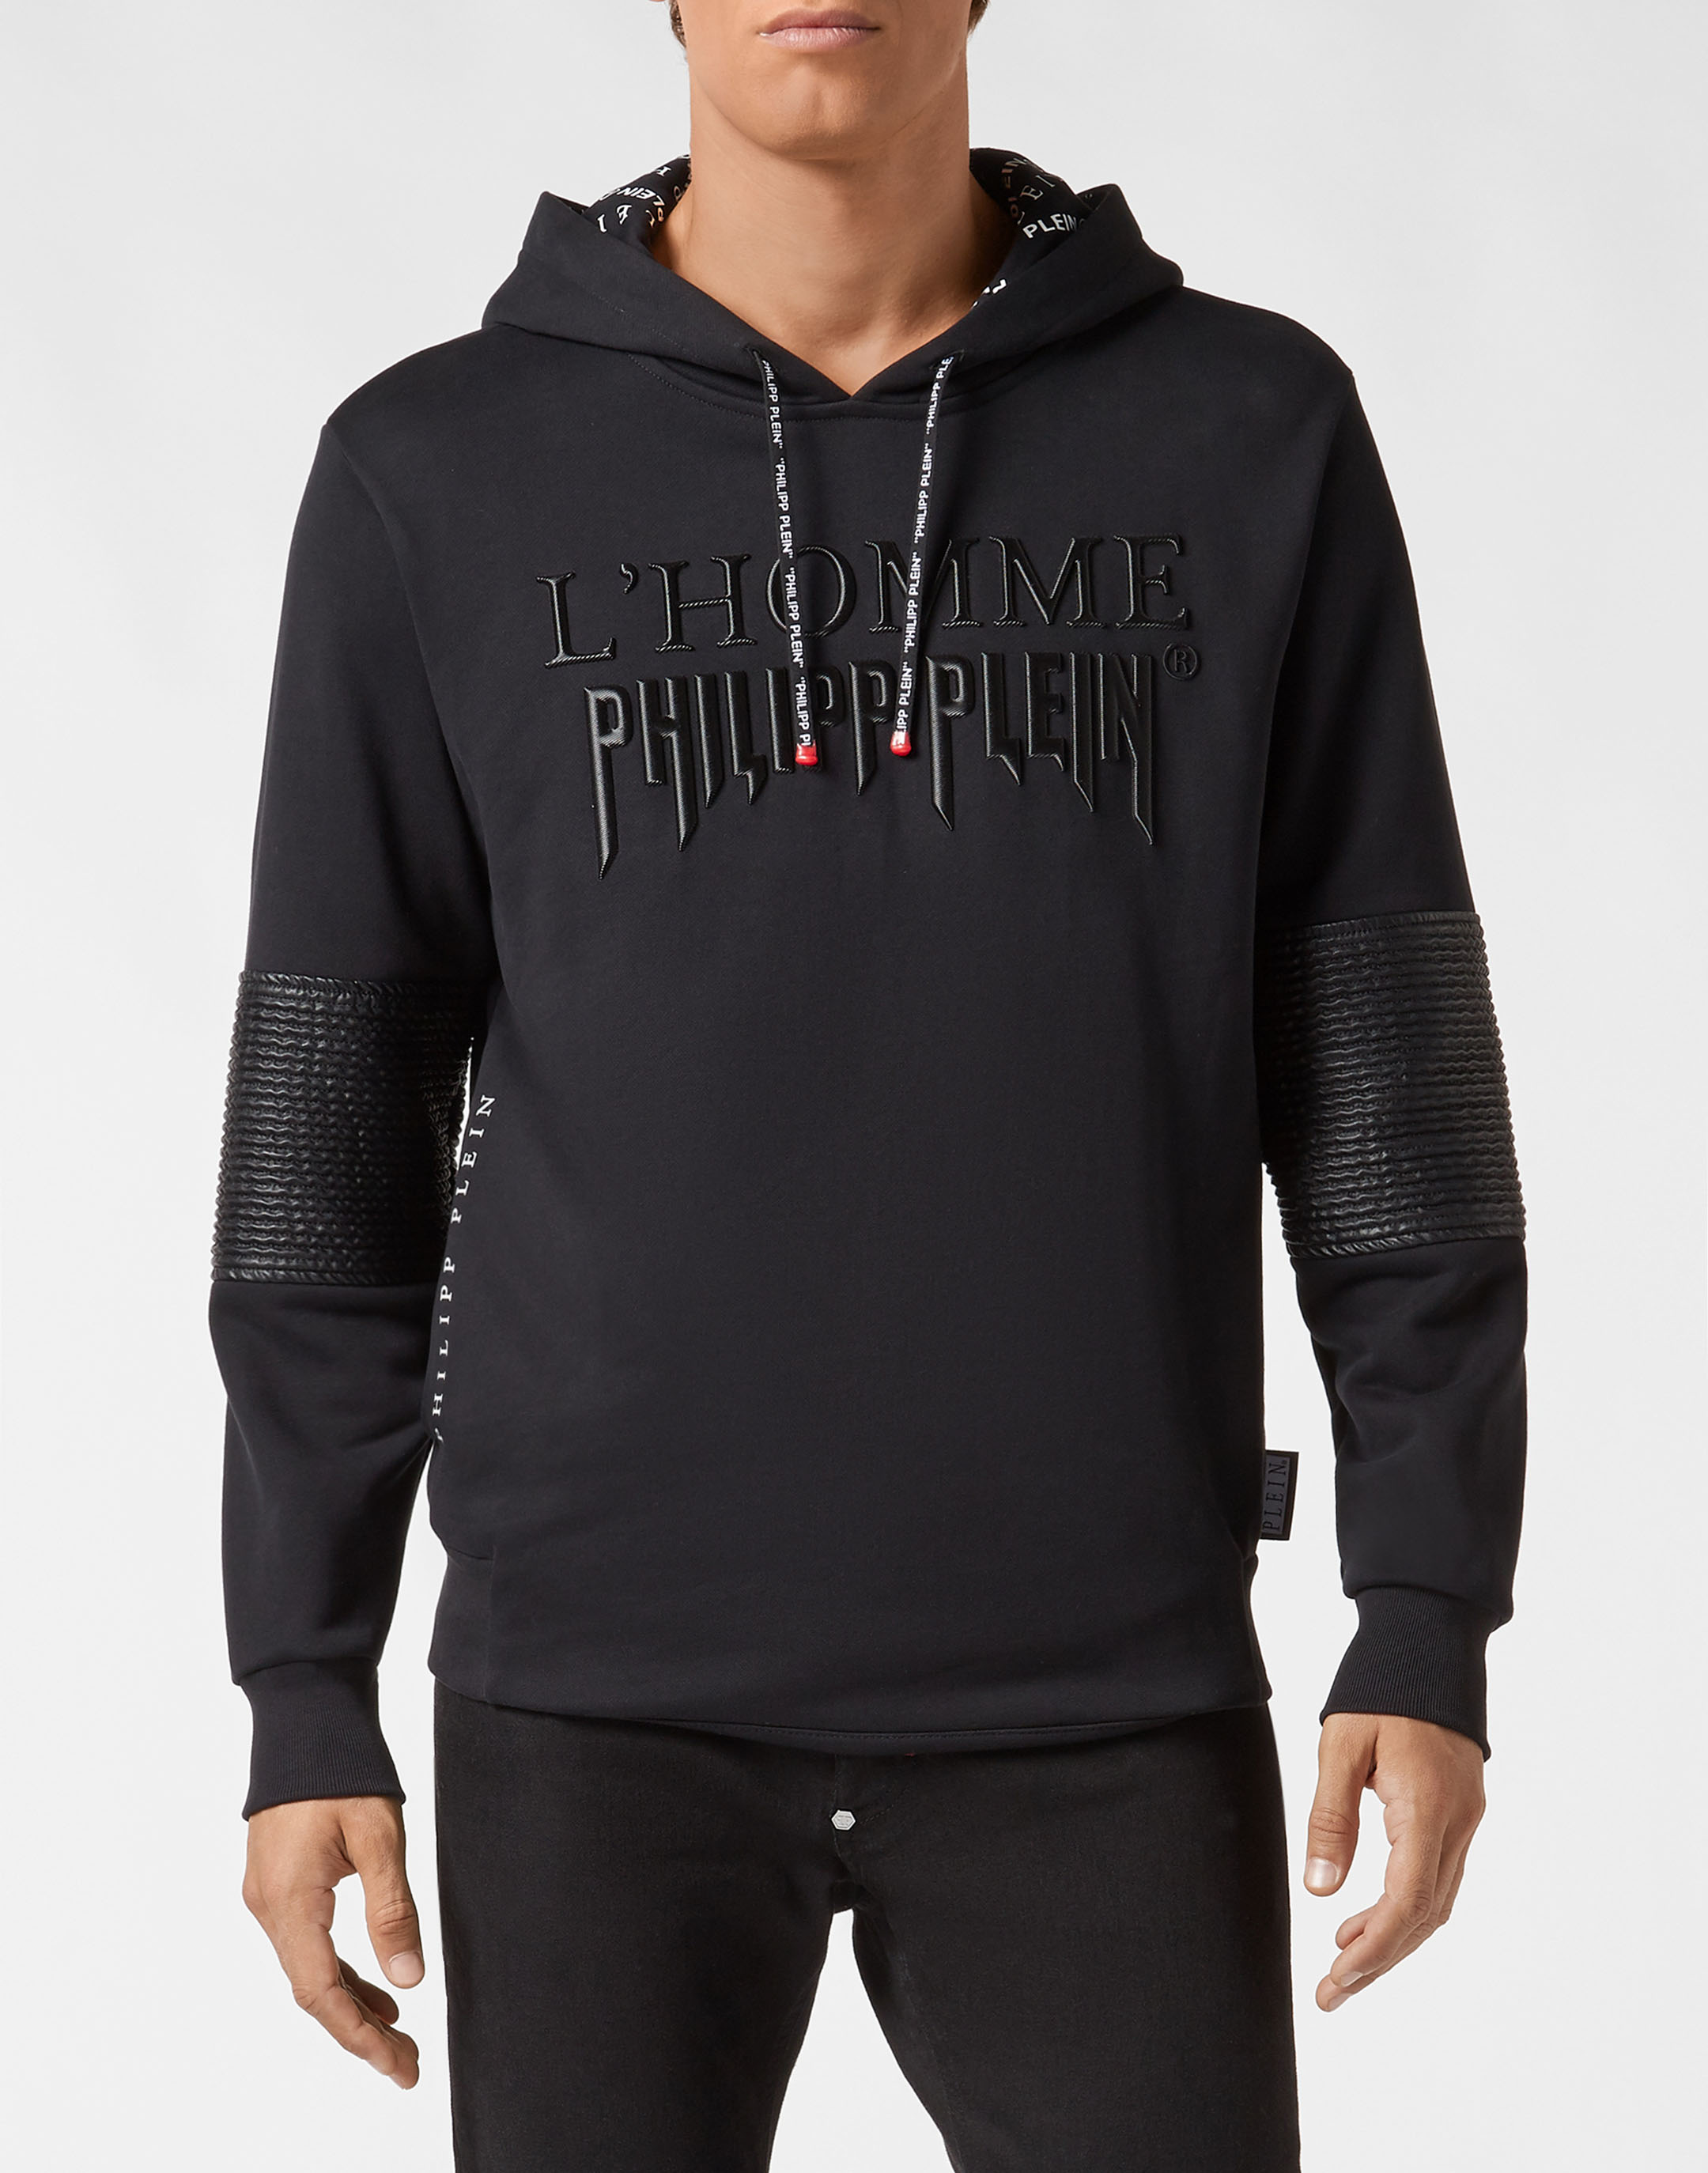 philippe plein hoodie